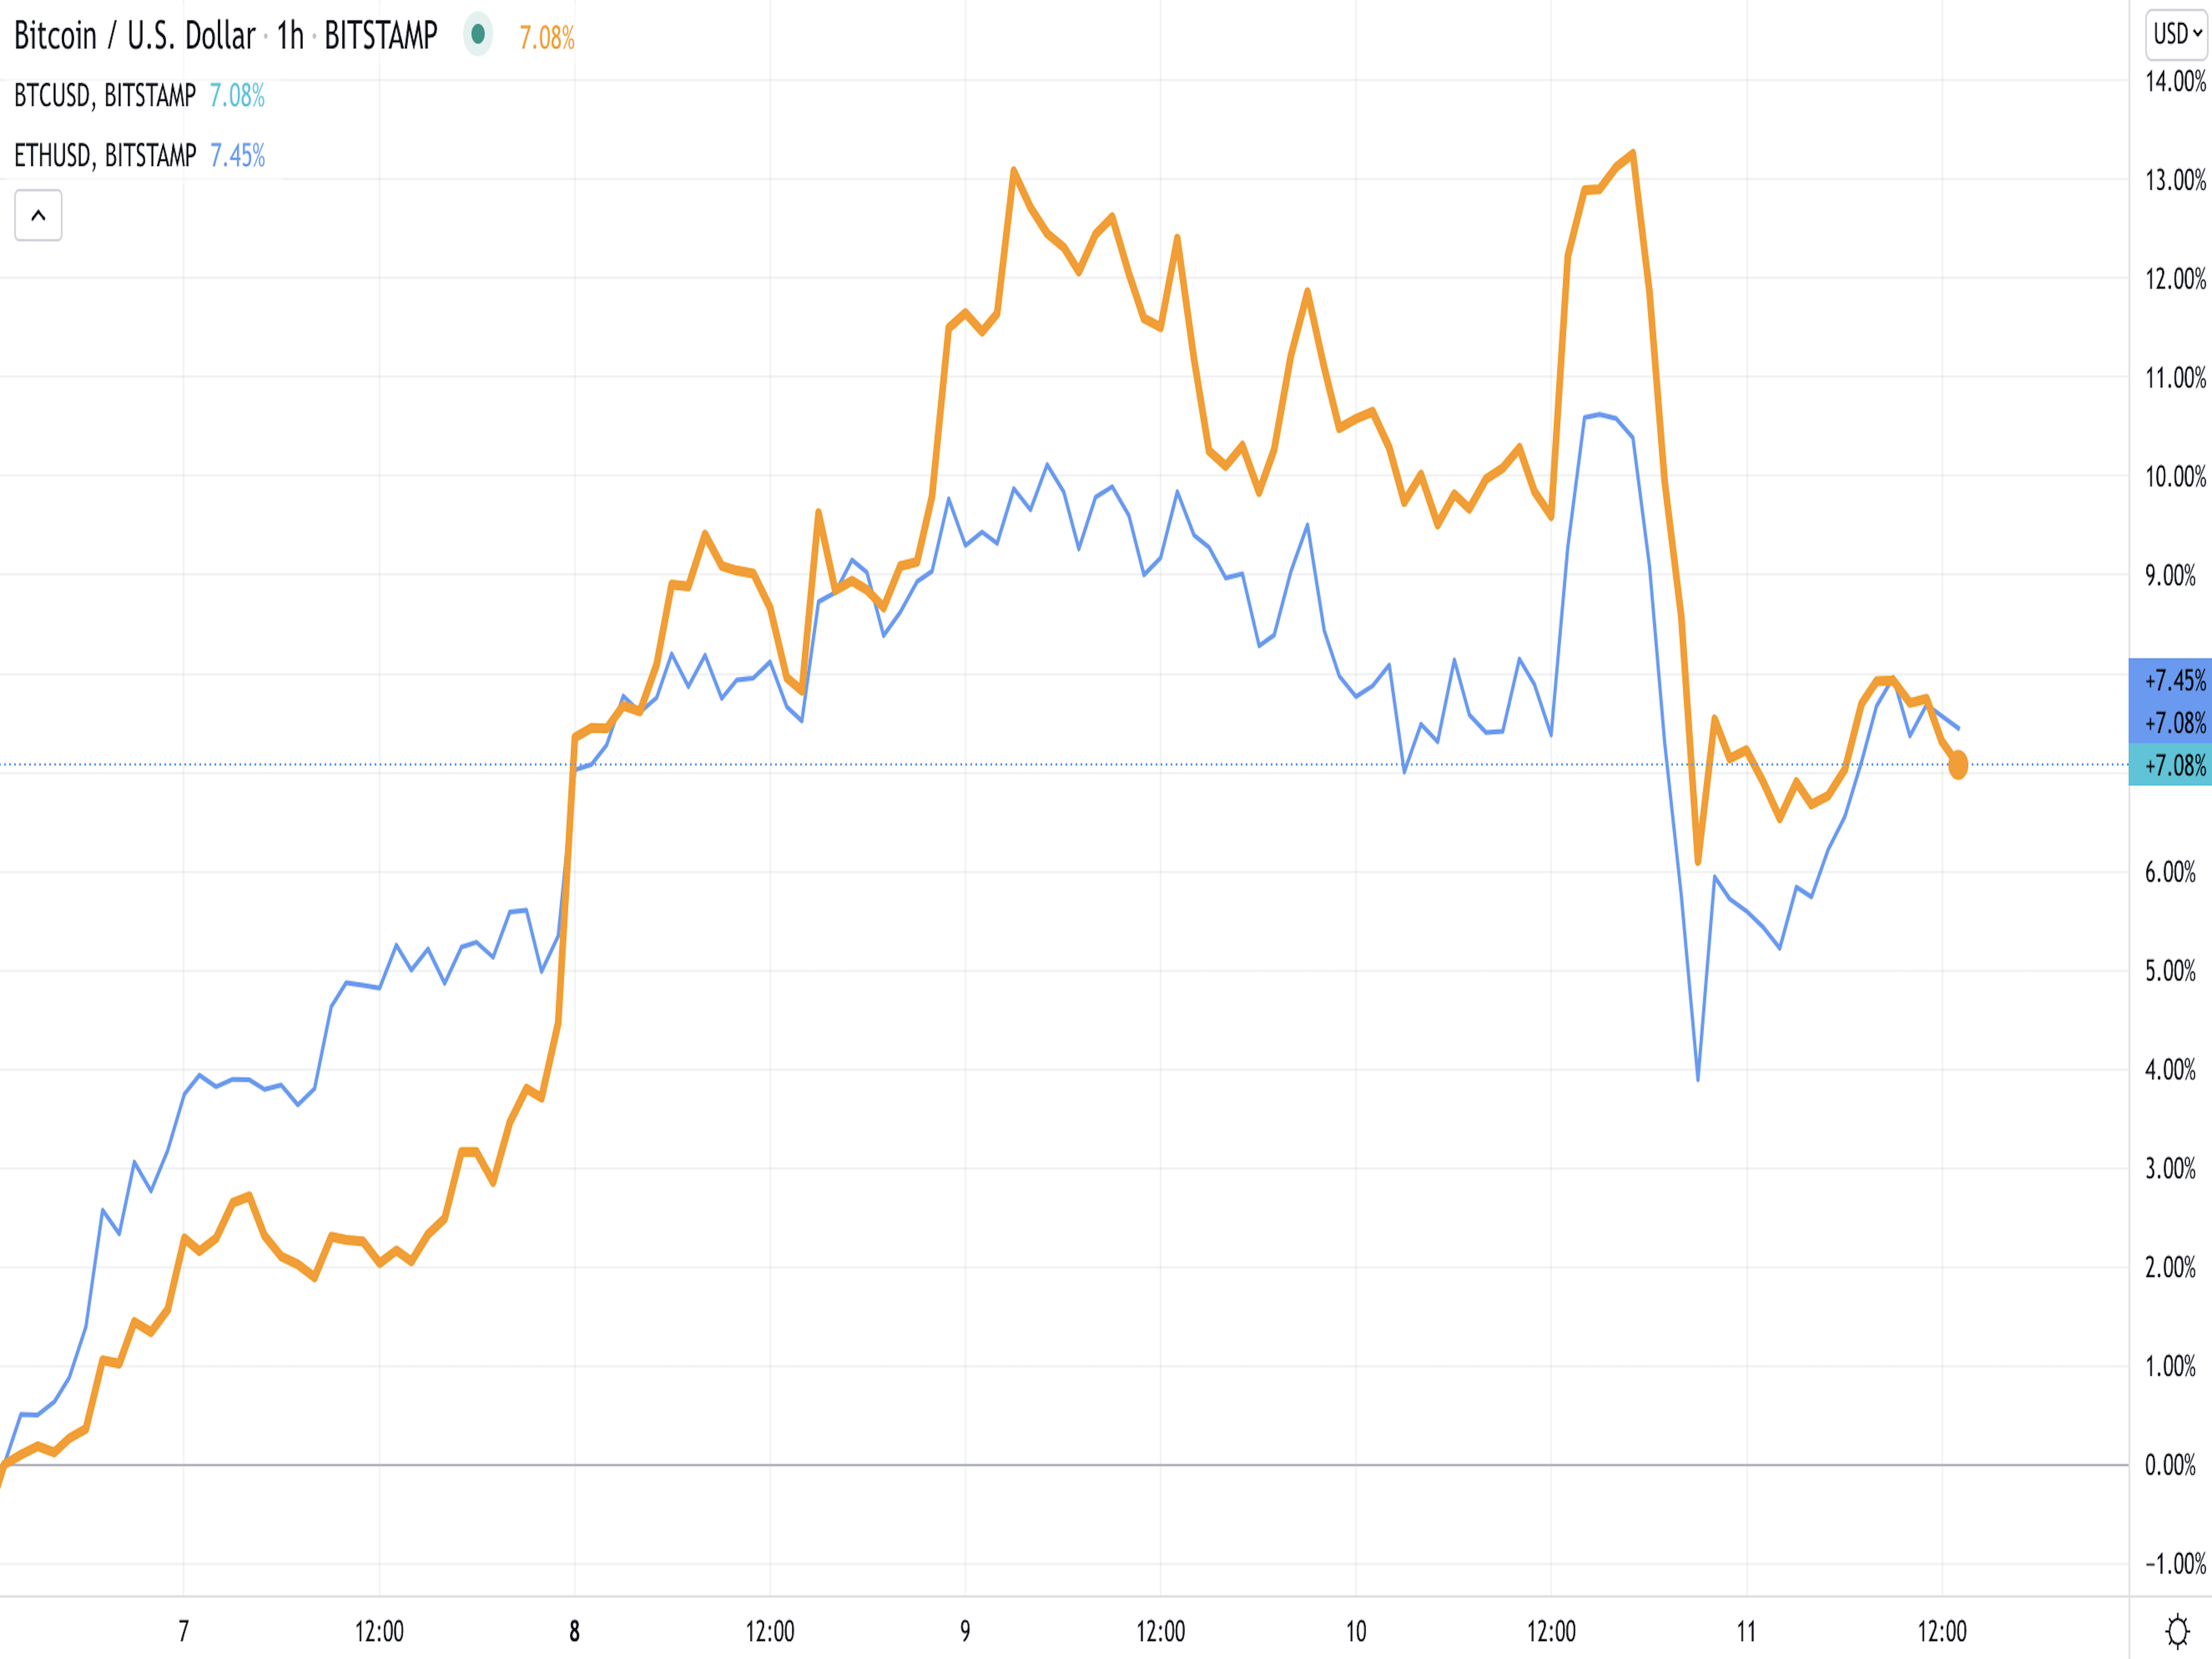 Bitcoin stock in us калькулятор доходности майнинга bitcoin в терахешей